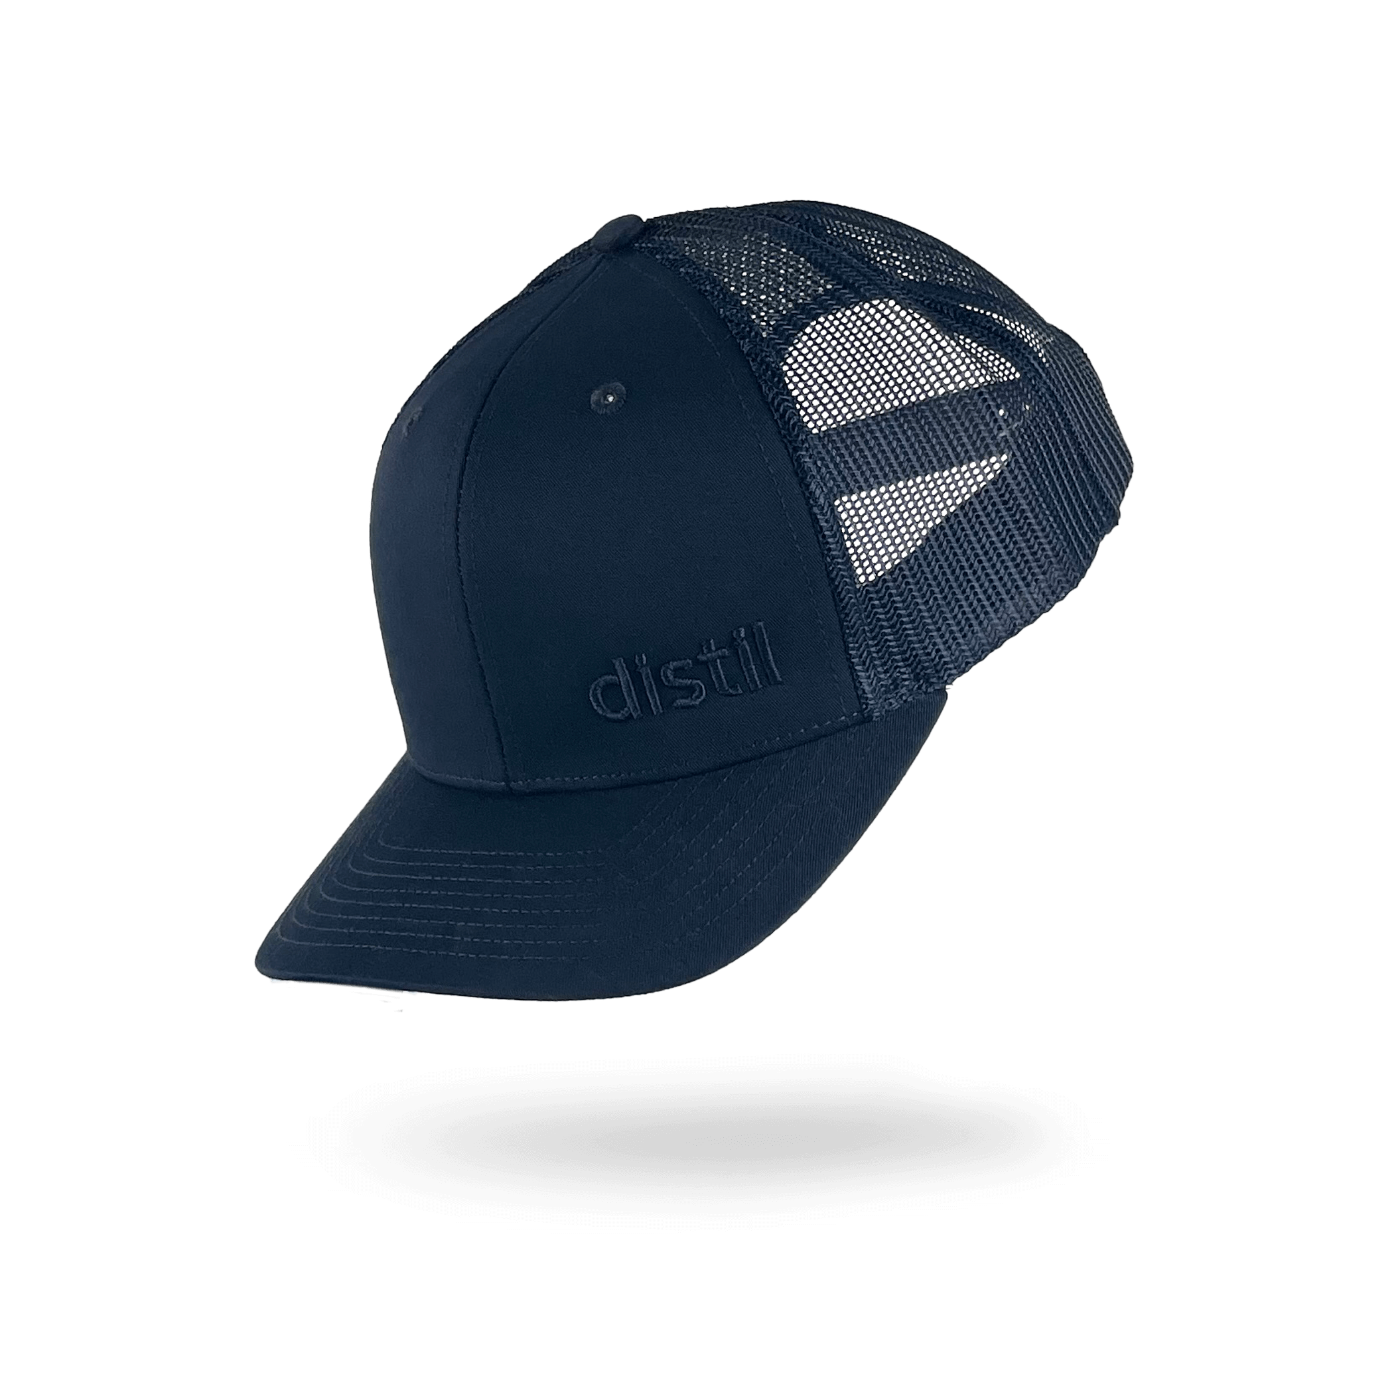 Distil embroidered hat in navy